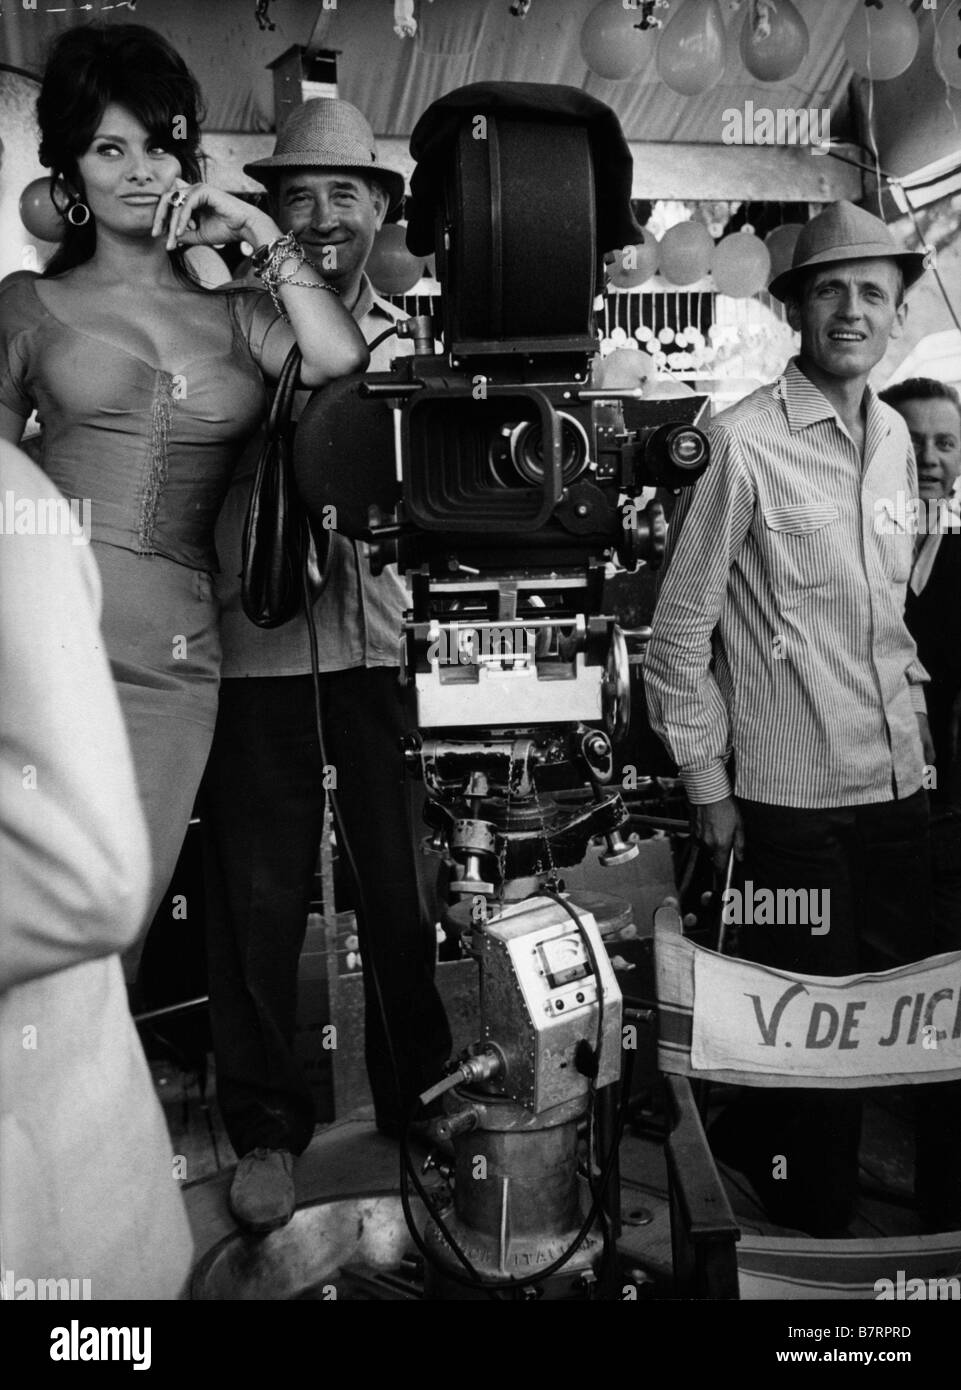 Boccaccio '70 segment "La Riffa" Année : 1962 Réalisateur : Vittorio De Sica, Sophia Loren, Vittorio De Sica Photo de tournage Banque D'Images